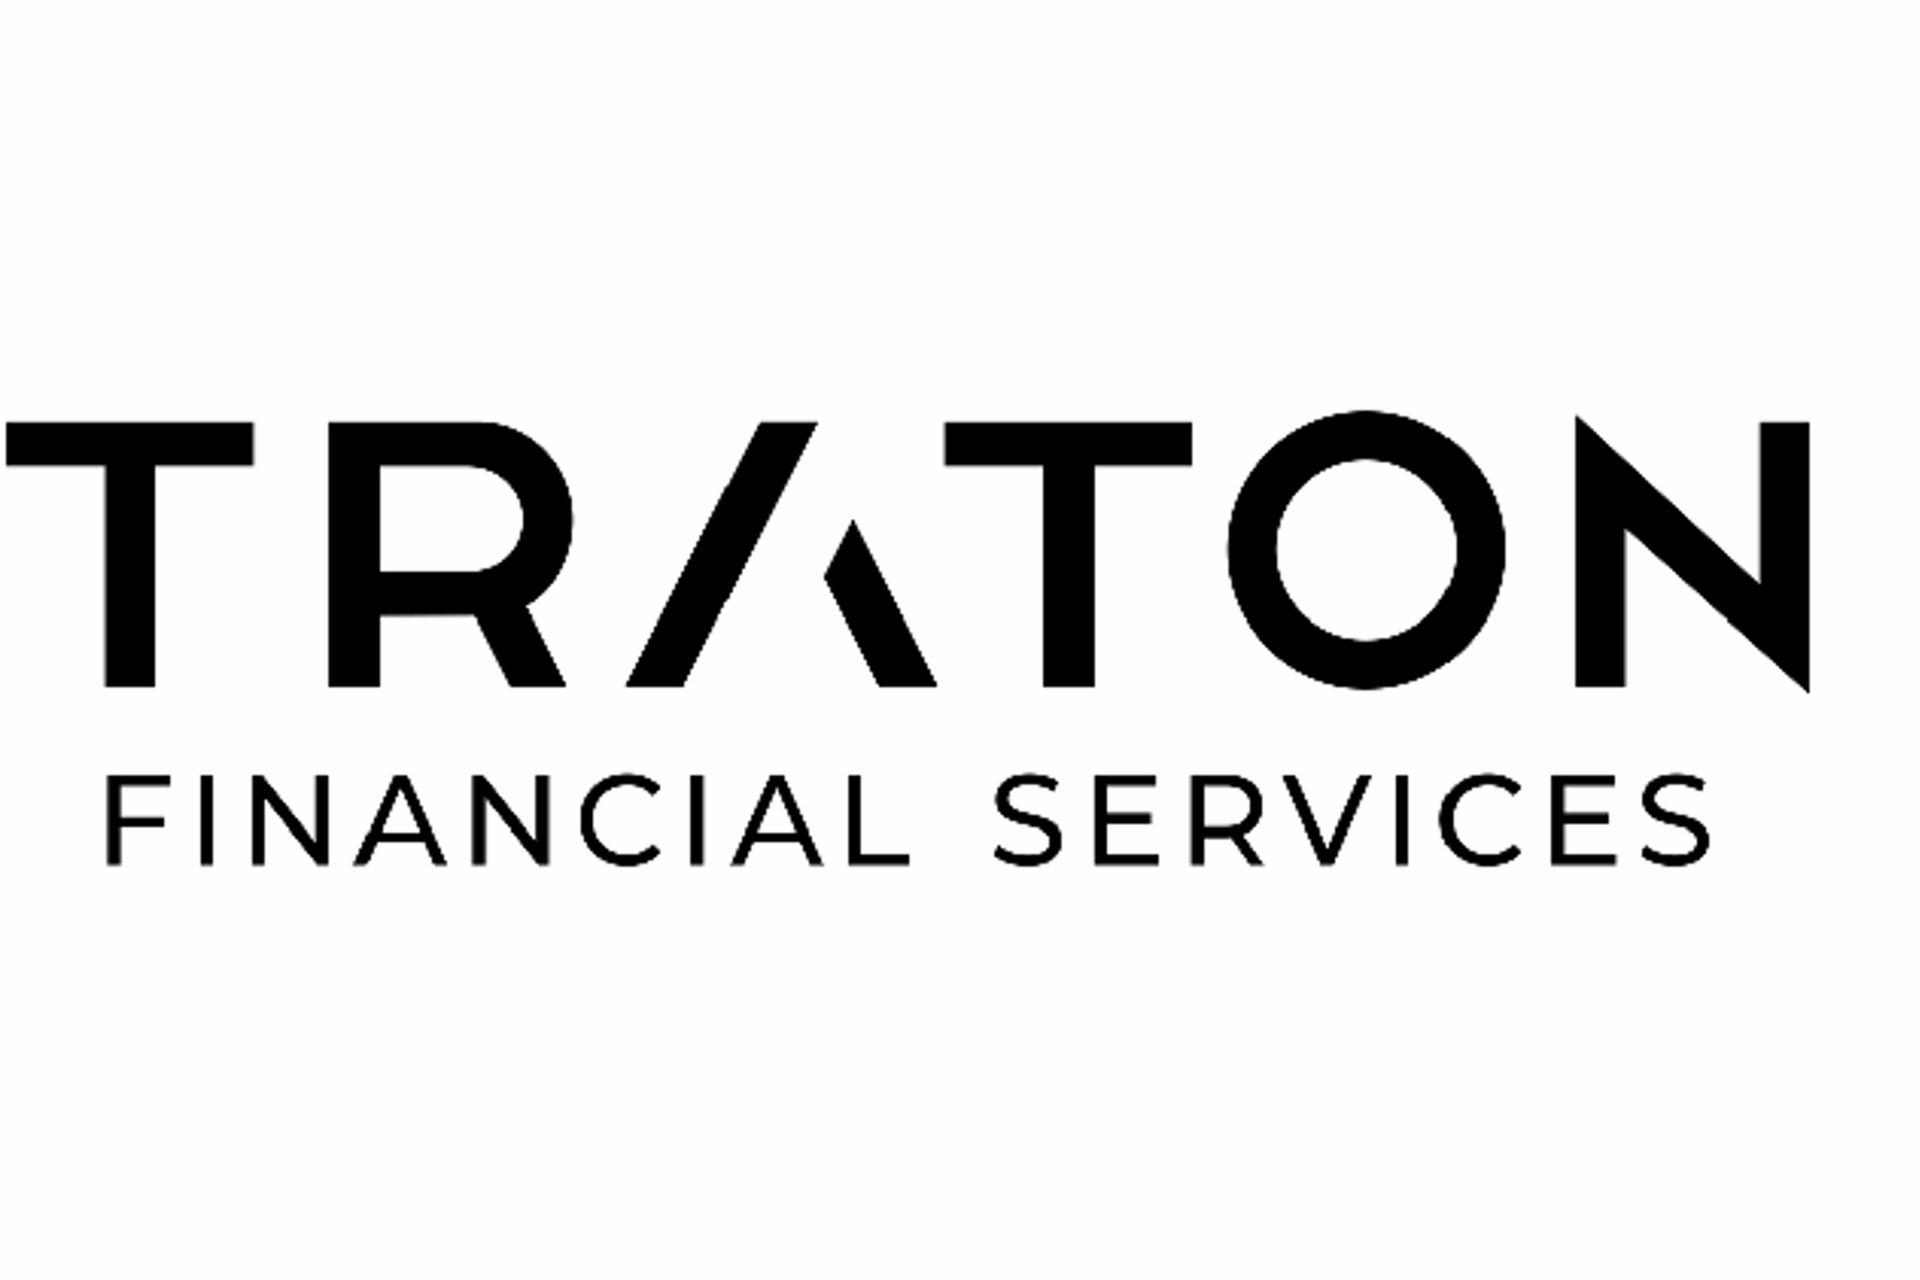 TRATON FINANCIAL SERVICES logo in black
                 